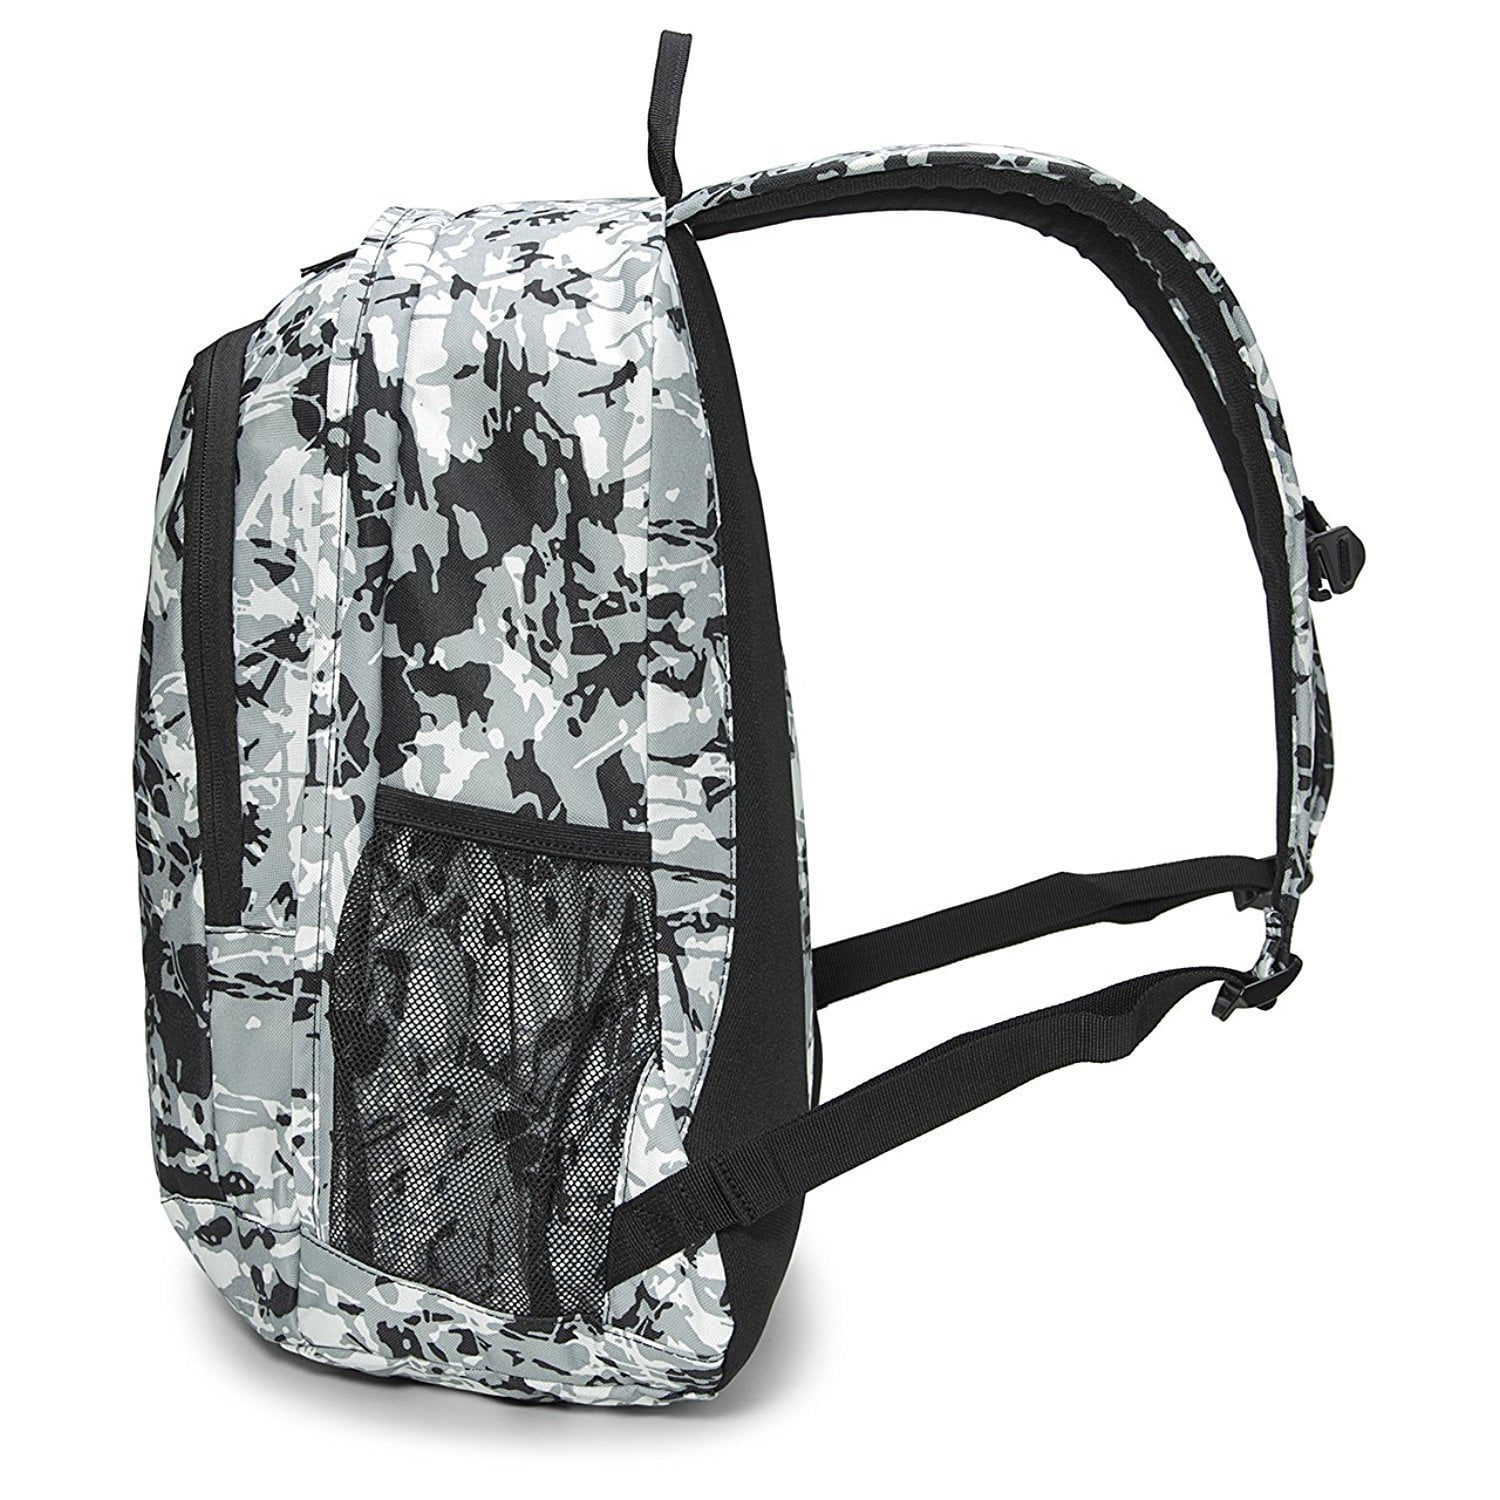 Nike Hayward Futura 2.0 Print Laptop Backpack STUDENT School (Black/Grey/White, One Size) - Walmart.com